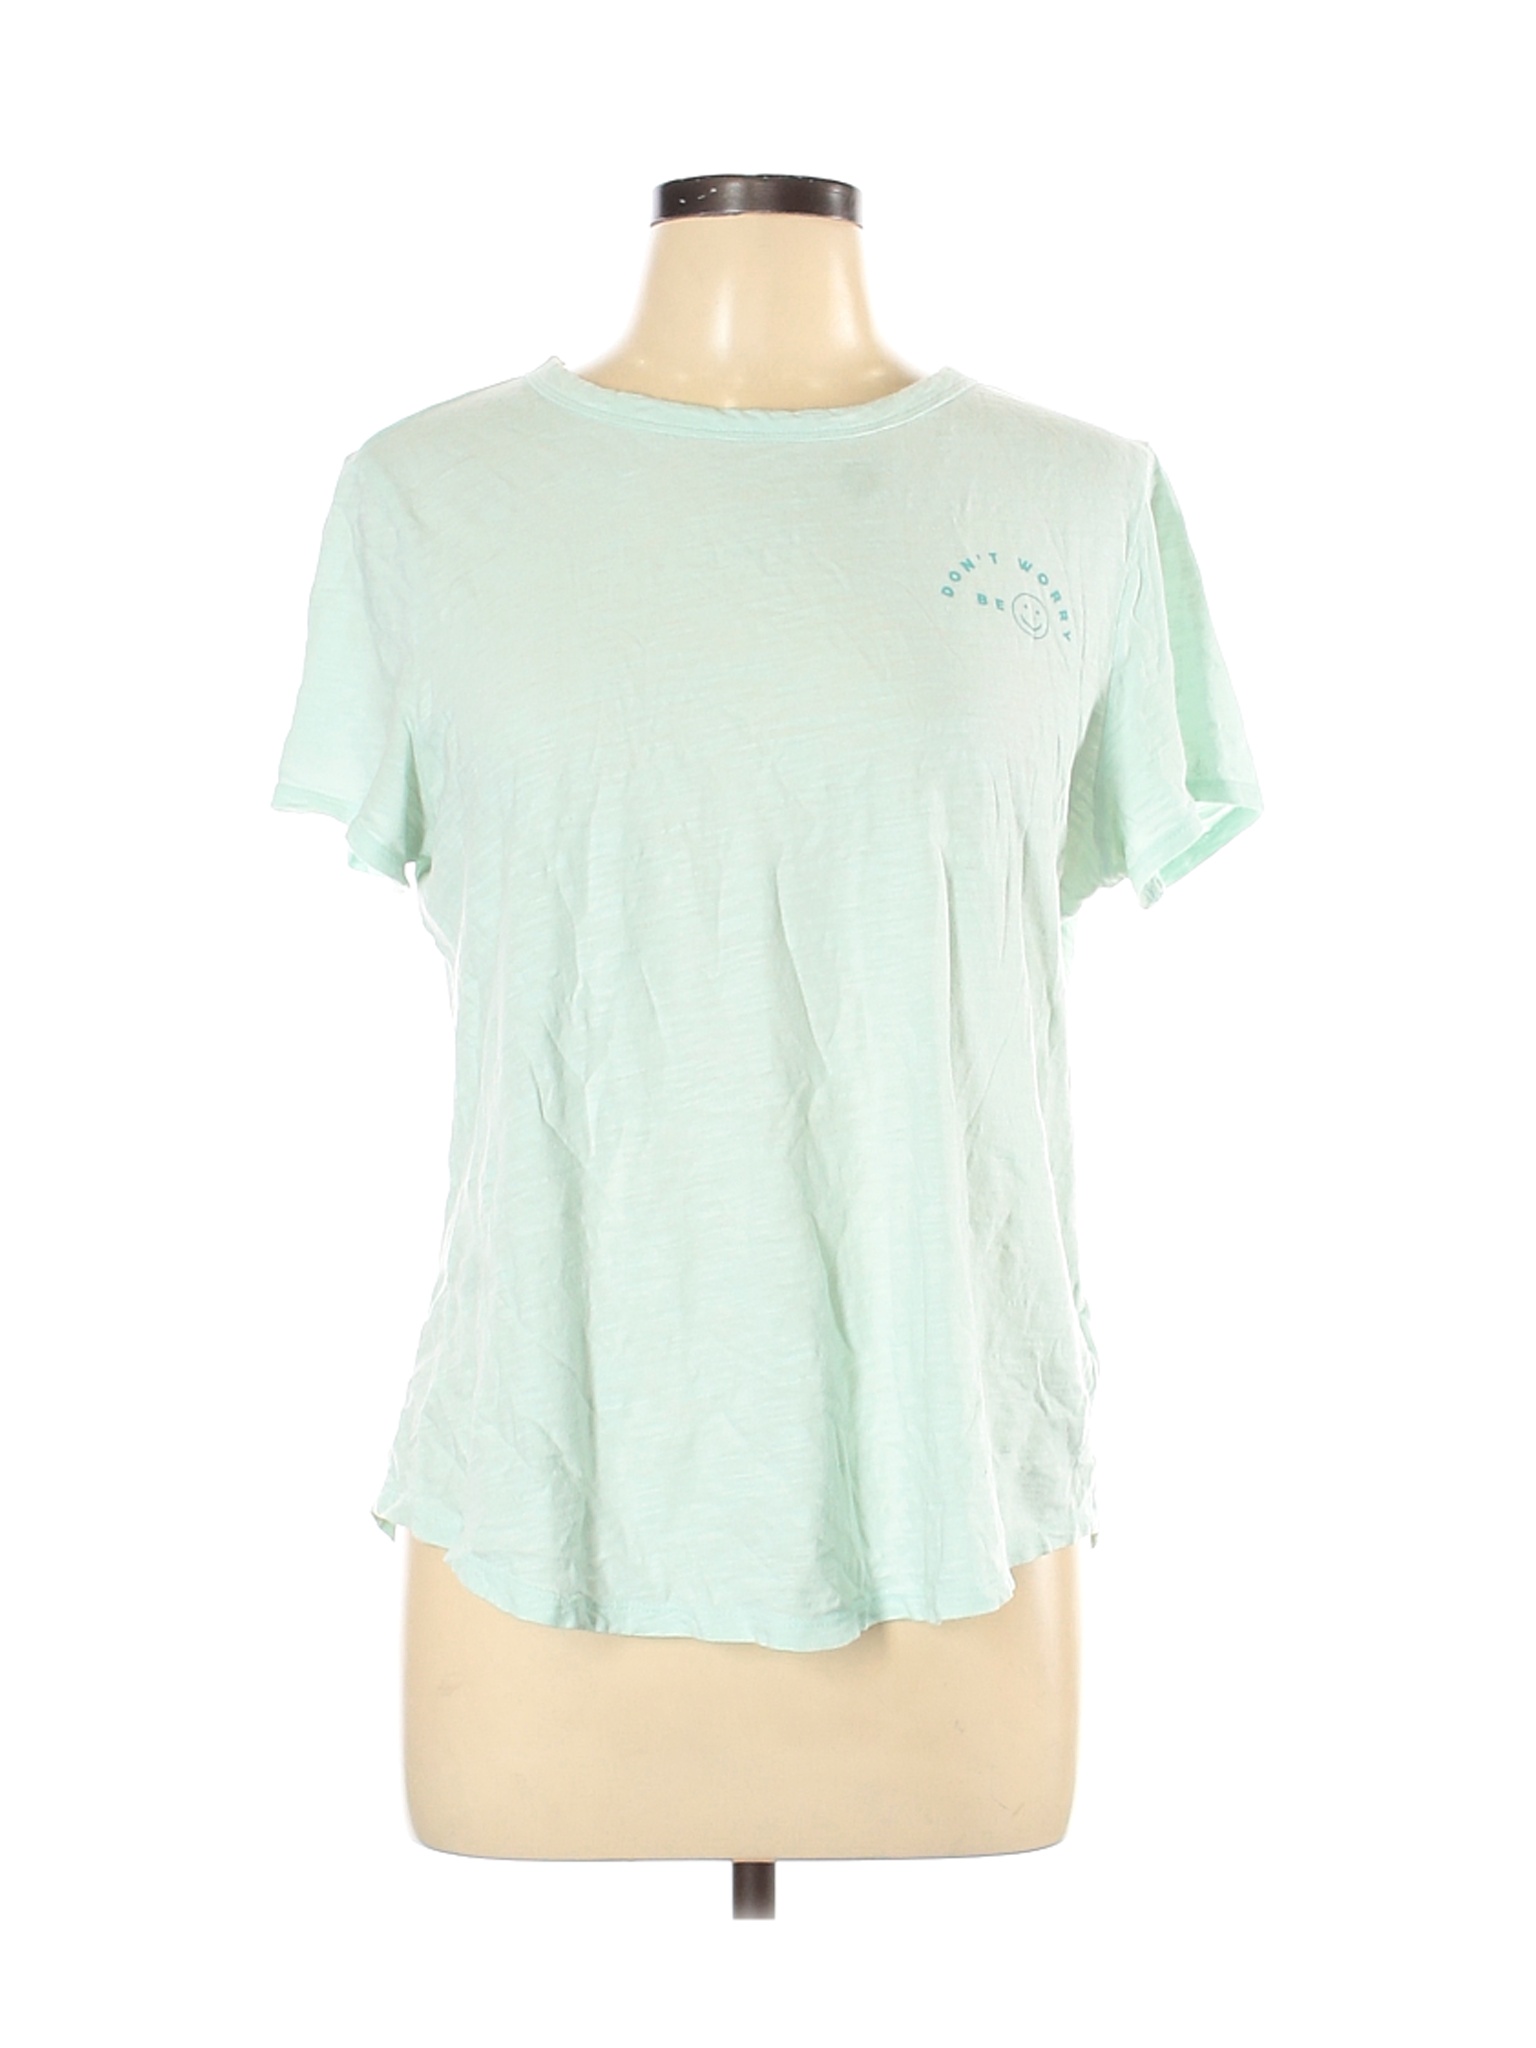 Old Navy Women Green Short Sleeve T-Shirt L | eBay